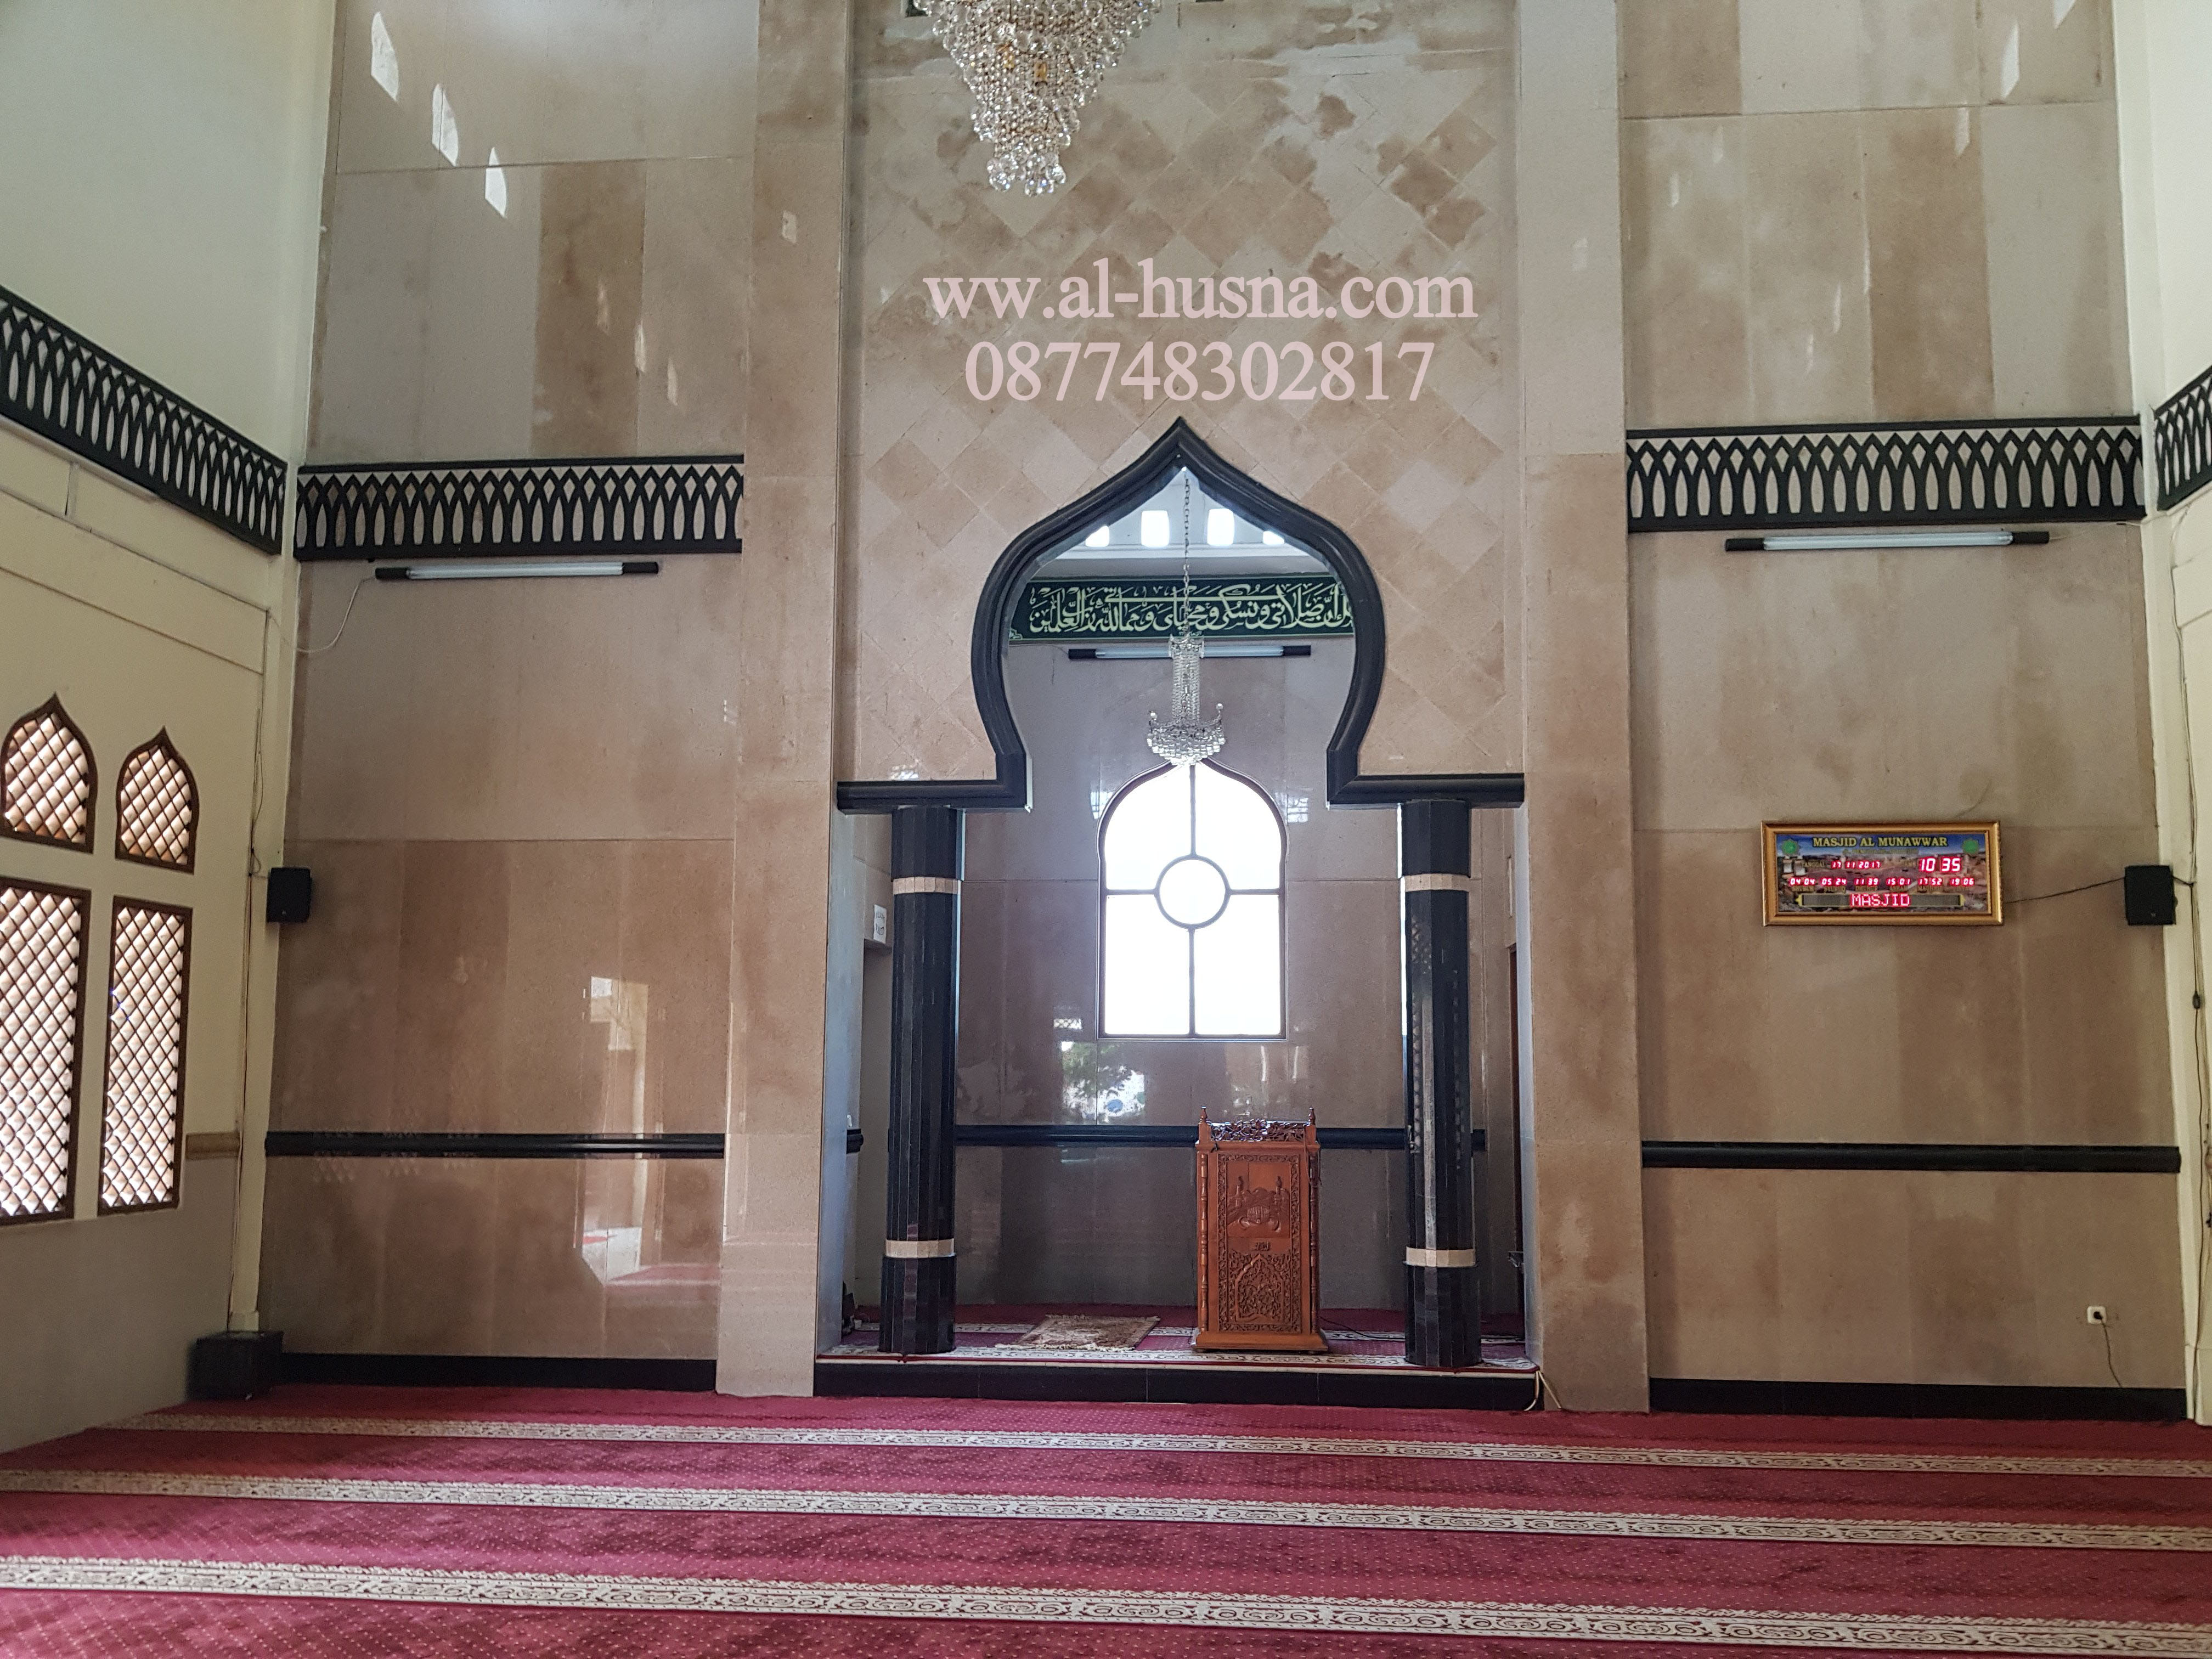 Daftar Harga Karpet Masjid Di Karangbaru Cikarang Utara